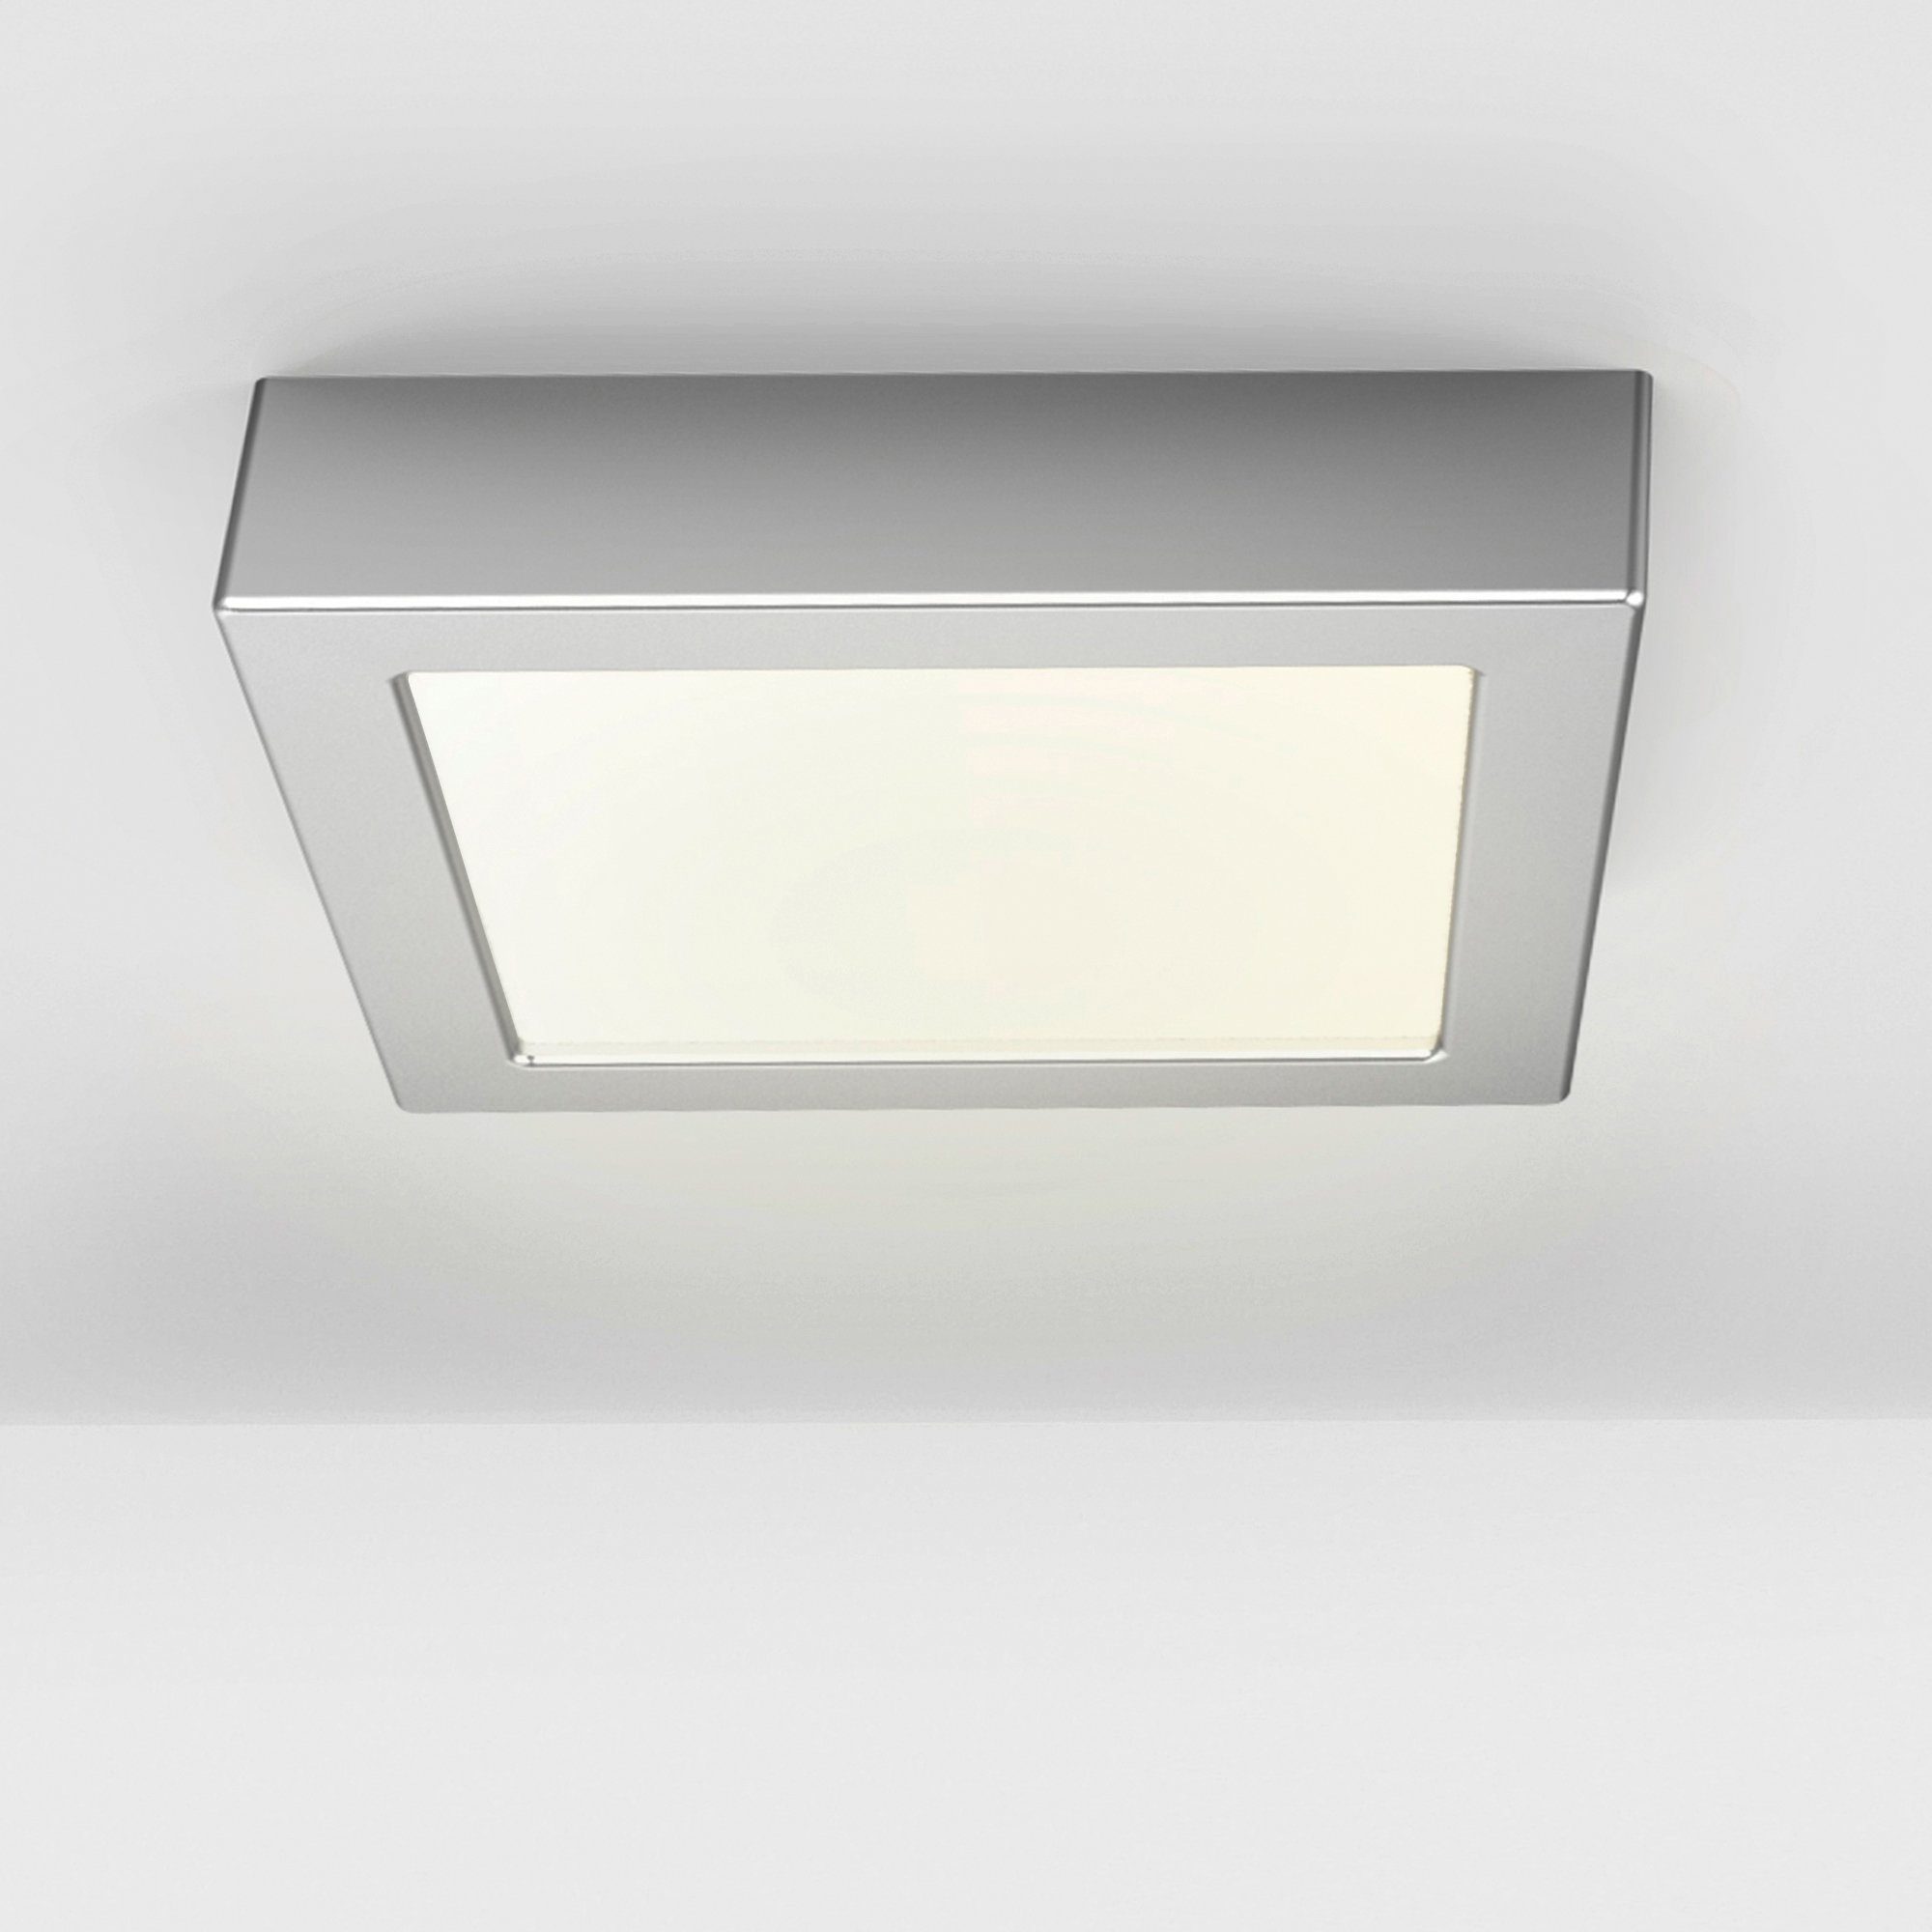 Panel 12W Warmweiß, Aufbauleuchte B.K.Licht LED Aufputzspot Lampe Garnet, Aufbaustrahler LED Unterbauleuchte fest LED integriert,